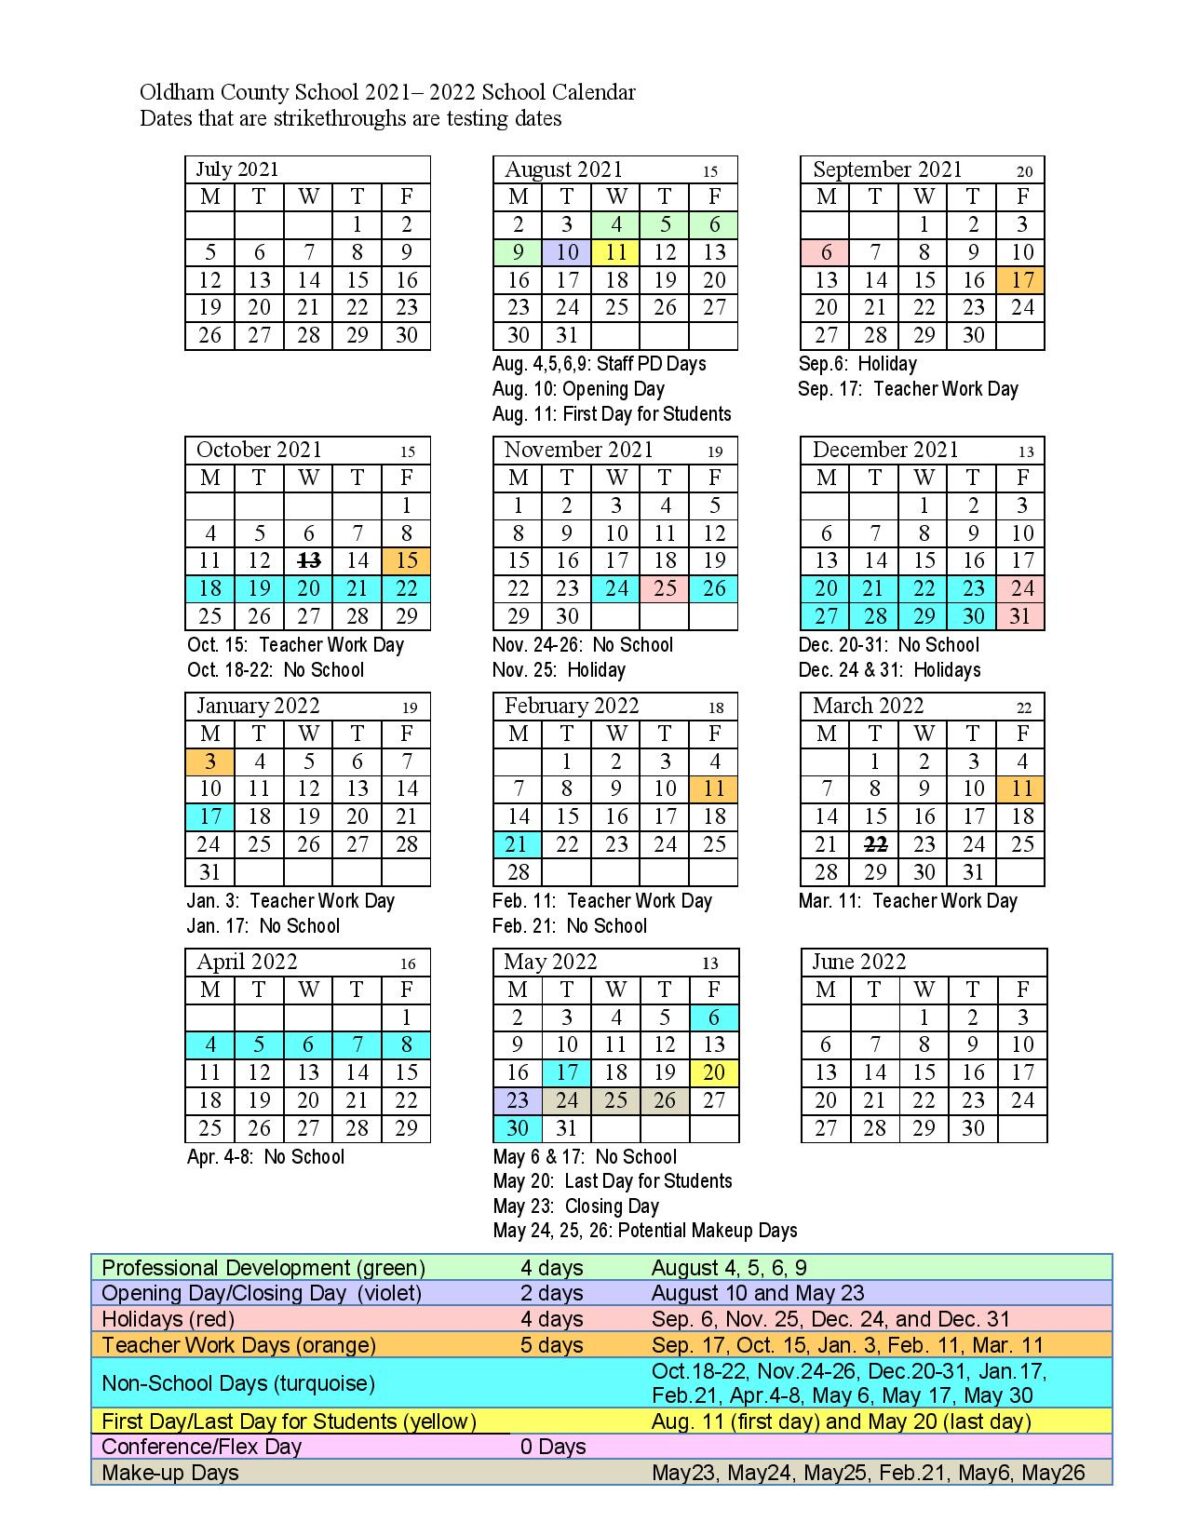 Oldham County Schools Calendar 20212022 in PDF